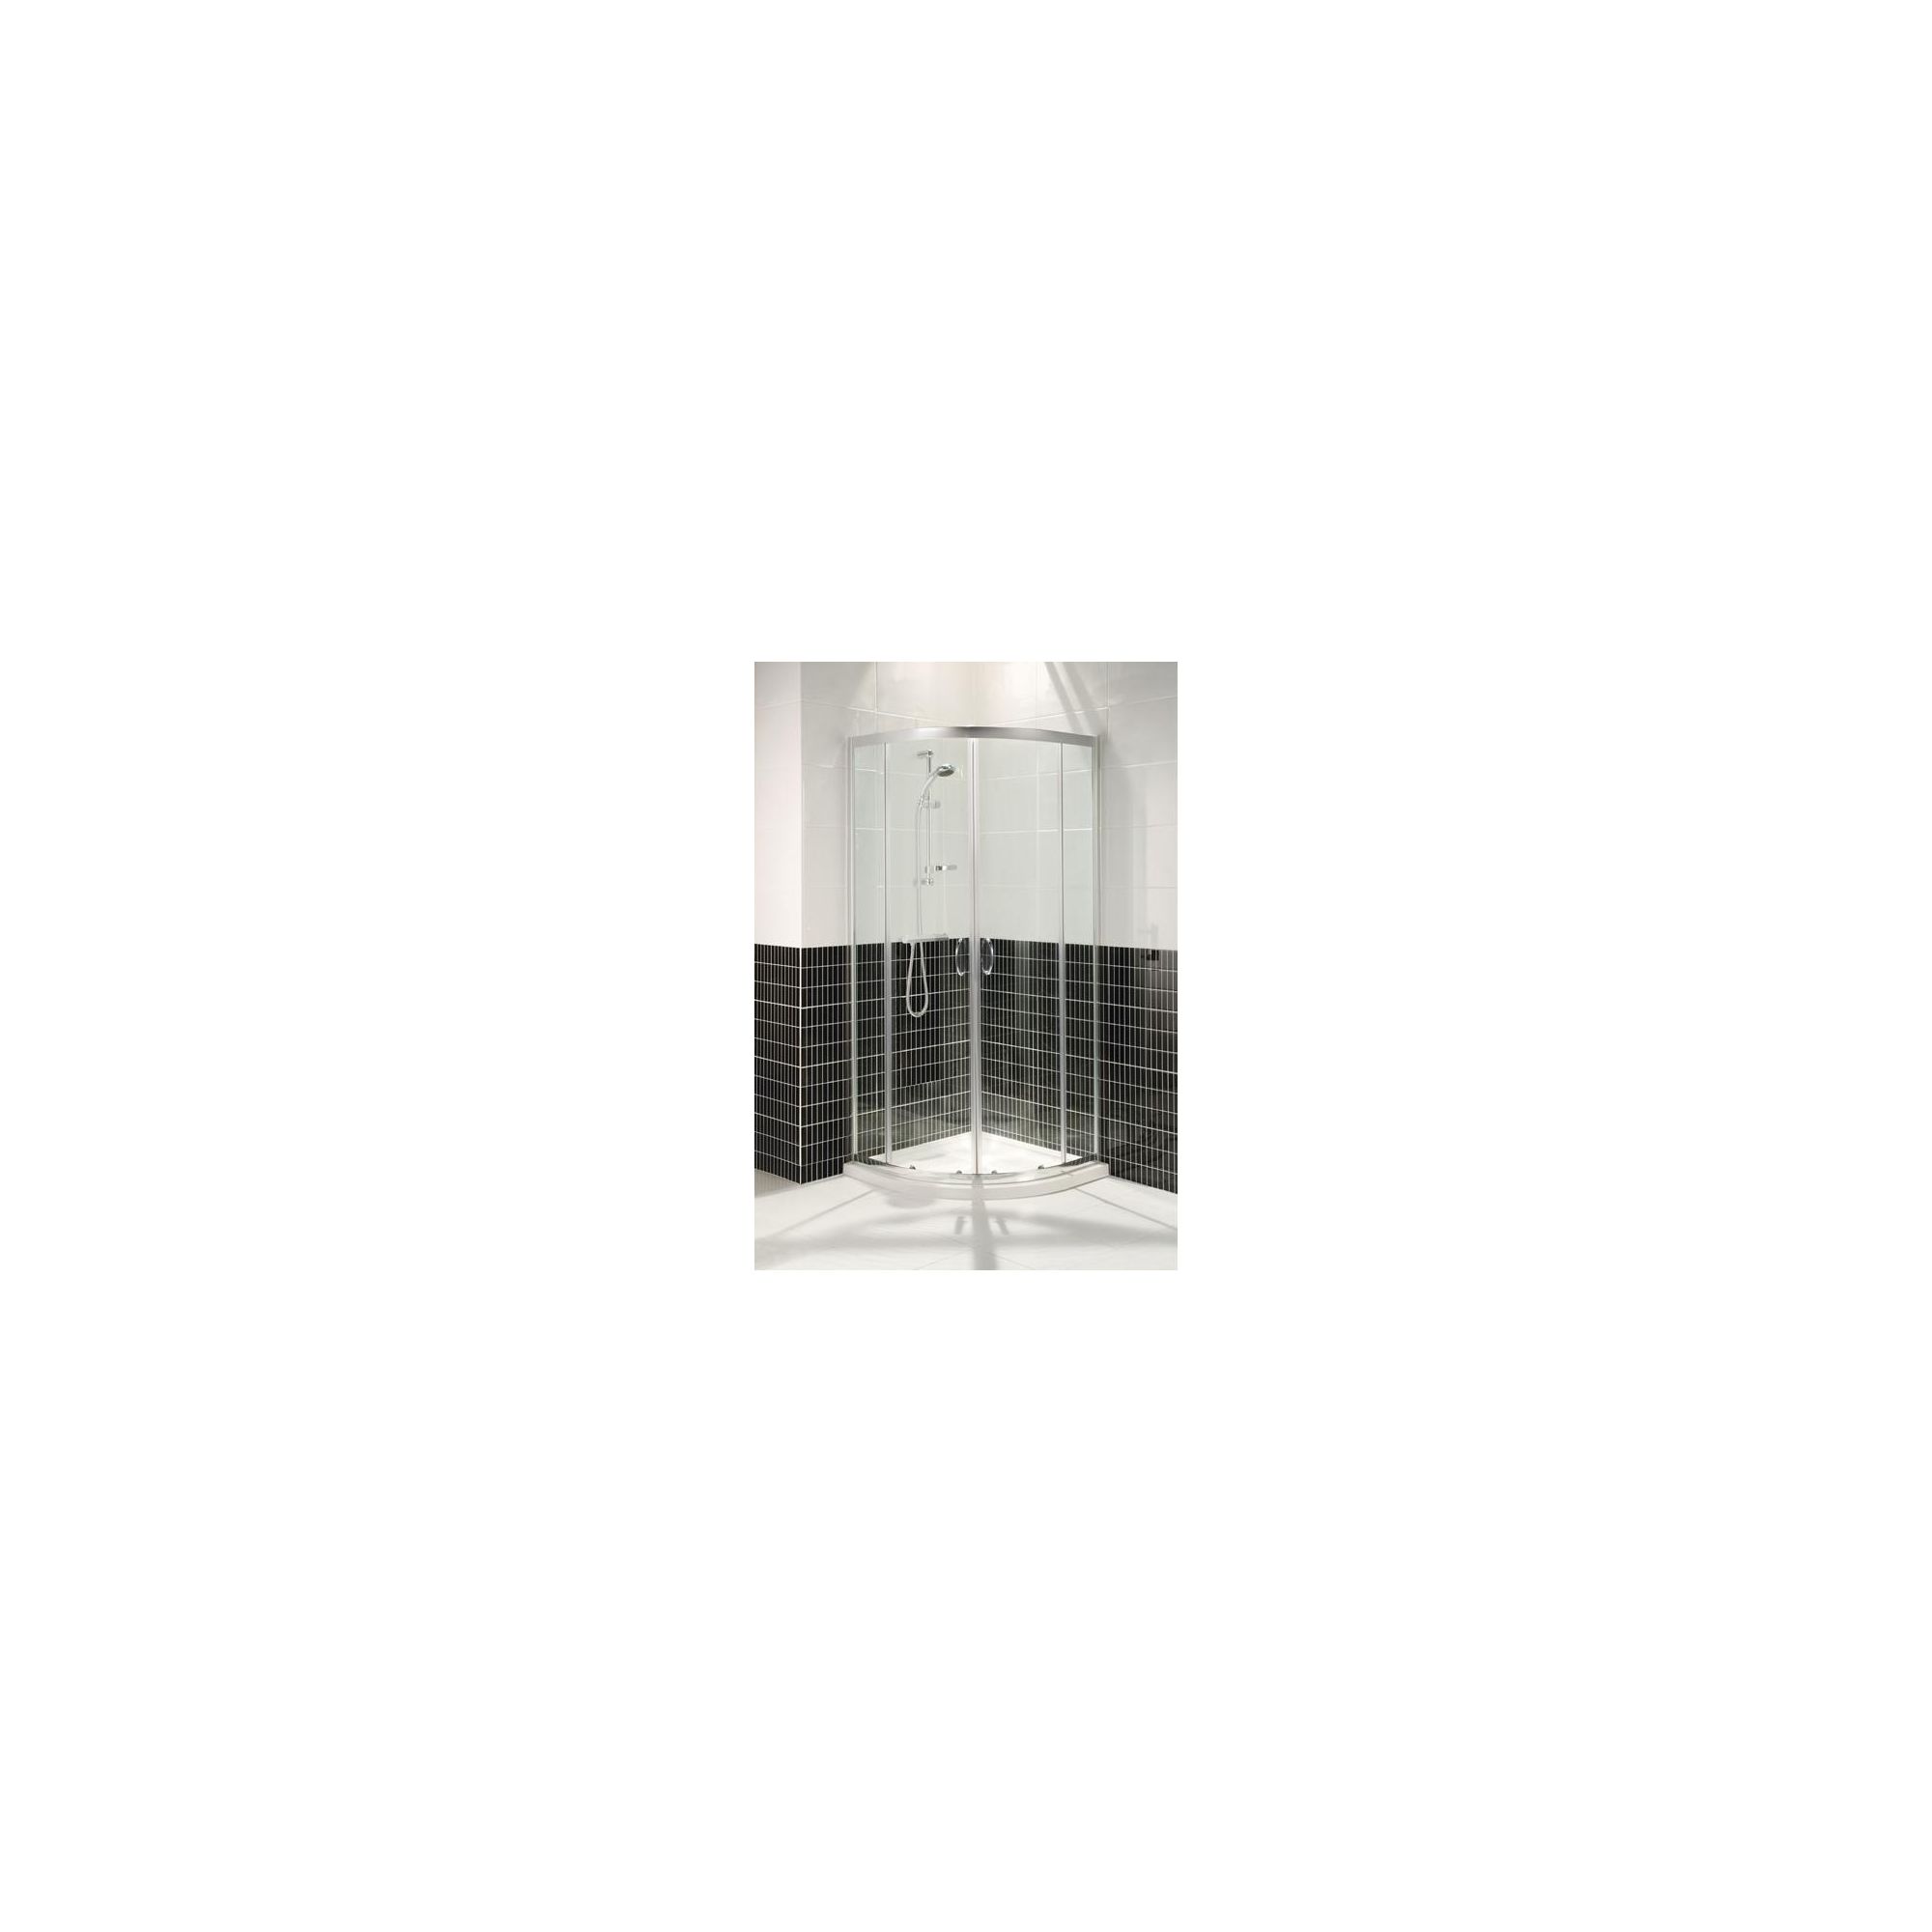 Balterley Semi-Frameless Quadrant Shower Enclosure, 900mm x 900mm, Low Profile Tray, 6mm Glass at Tesco Direct